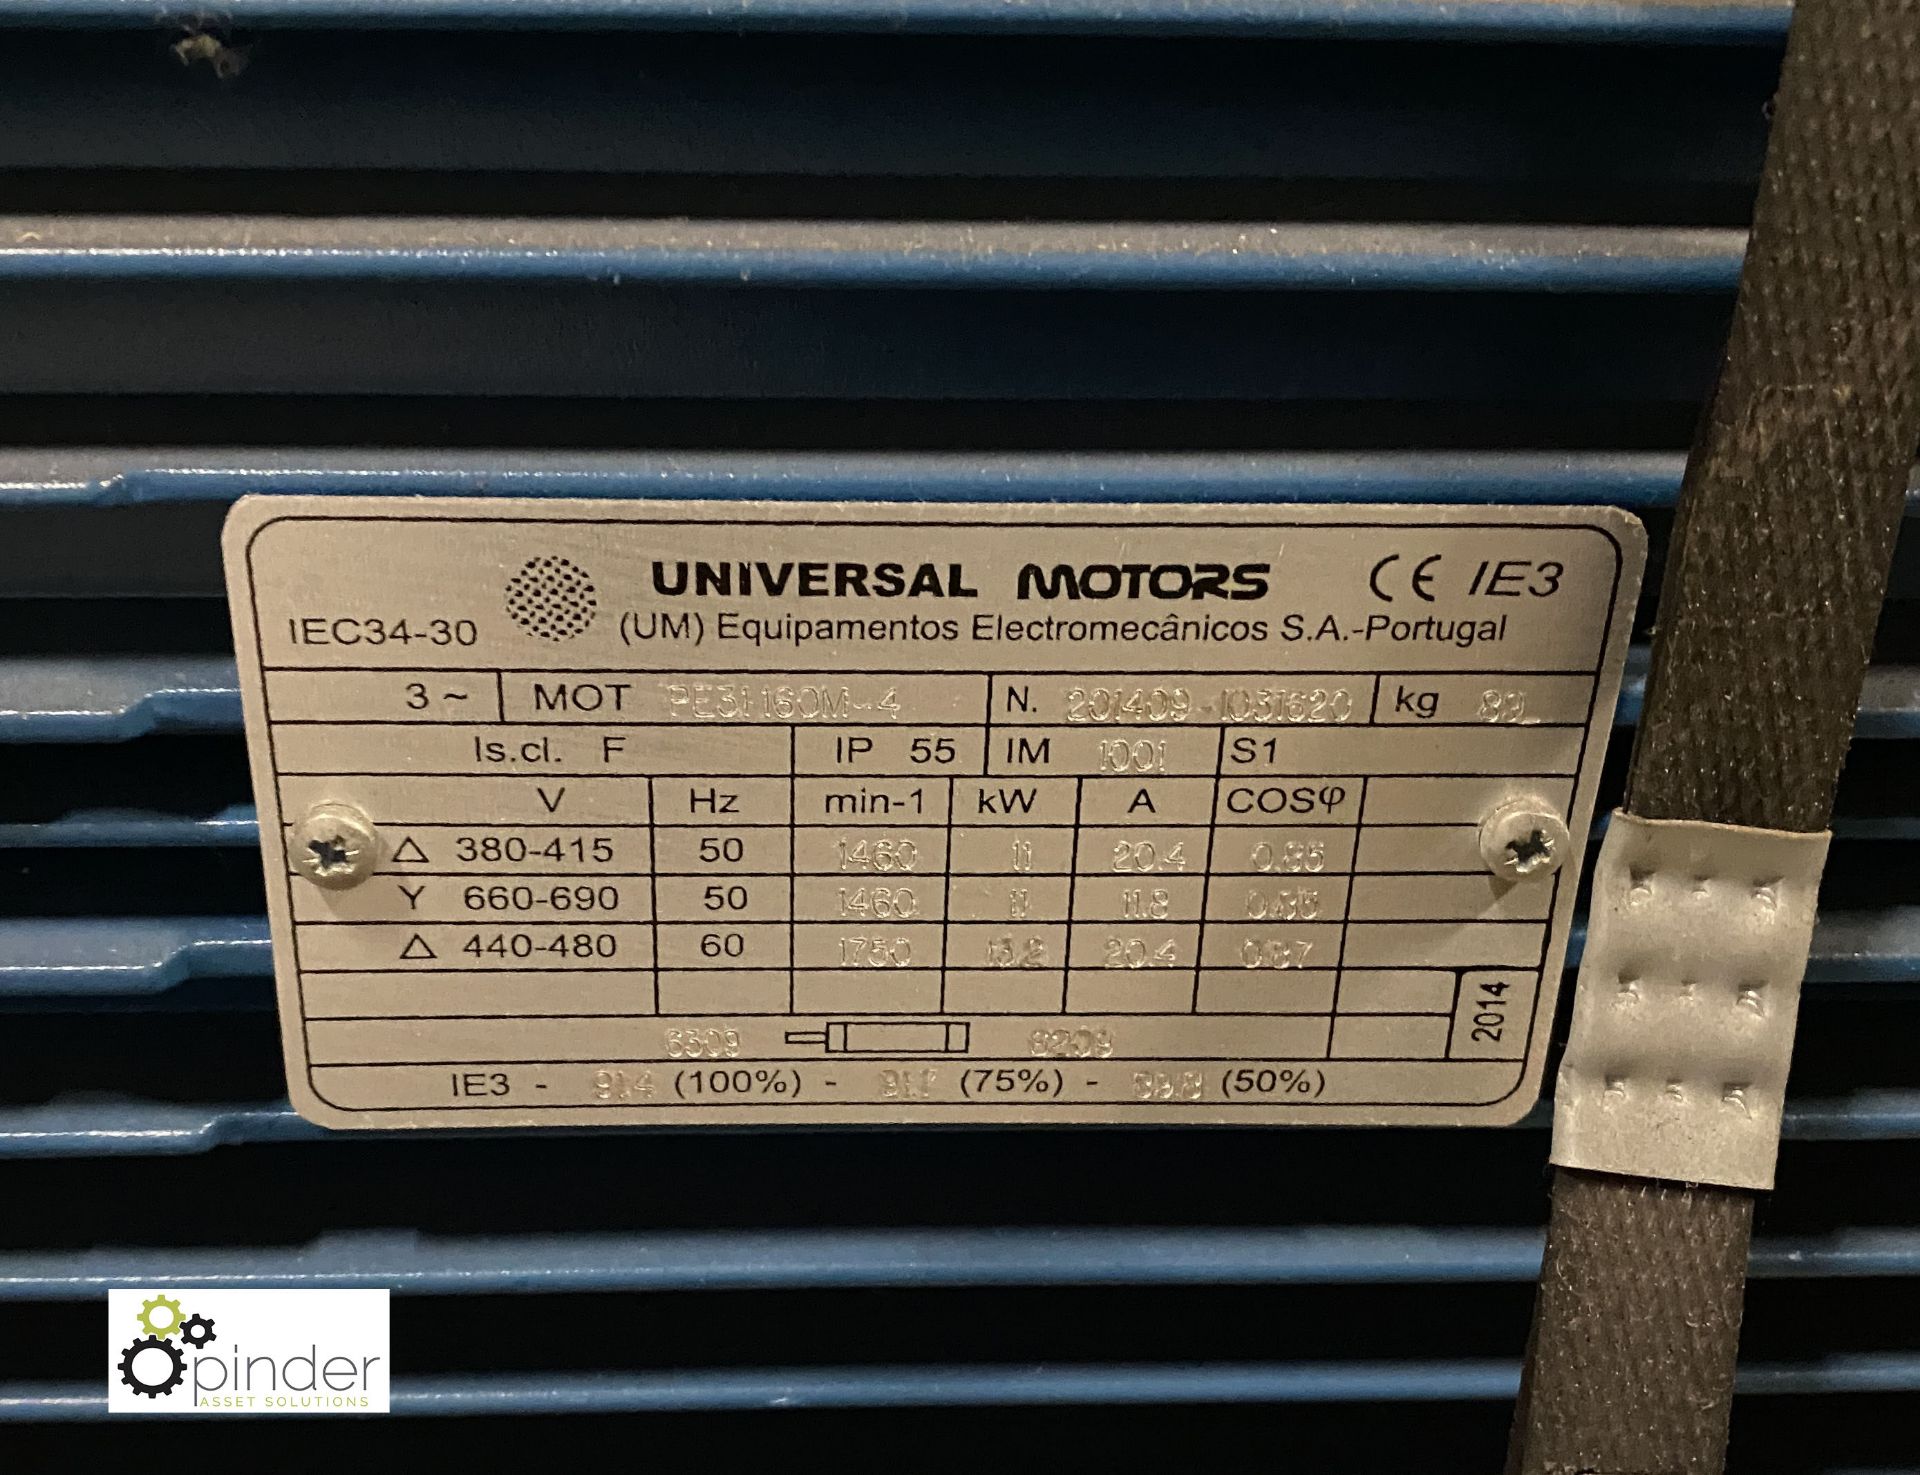 Universal Motors PE31 160M-4 Electric Motor, 11kw, 1460rpm, IP55, IE3, 89Kg (outside maintenance) ( - Image 3 of 3